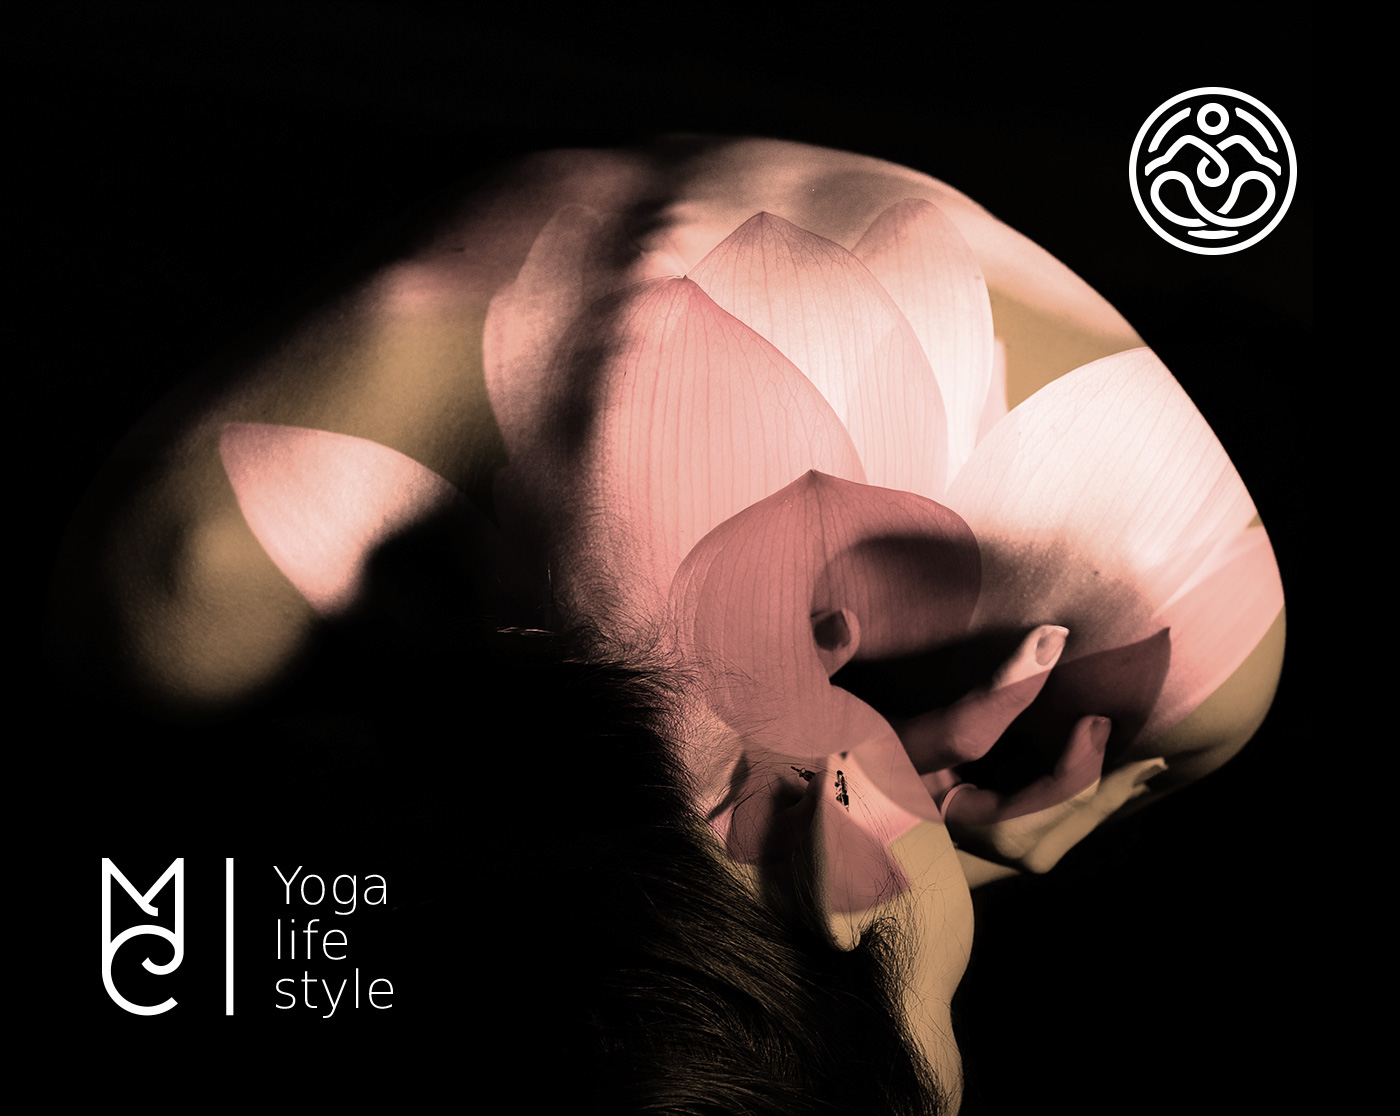 Yoga liefe style identidade gráfica branding  Logotipo Yoga yoga brand